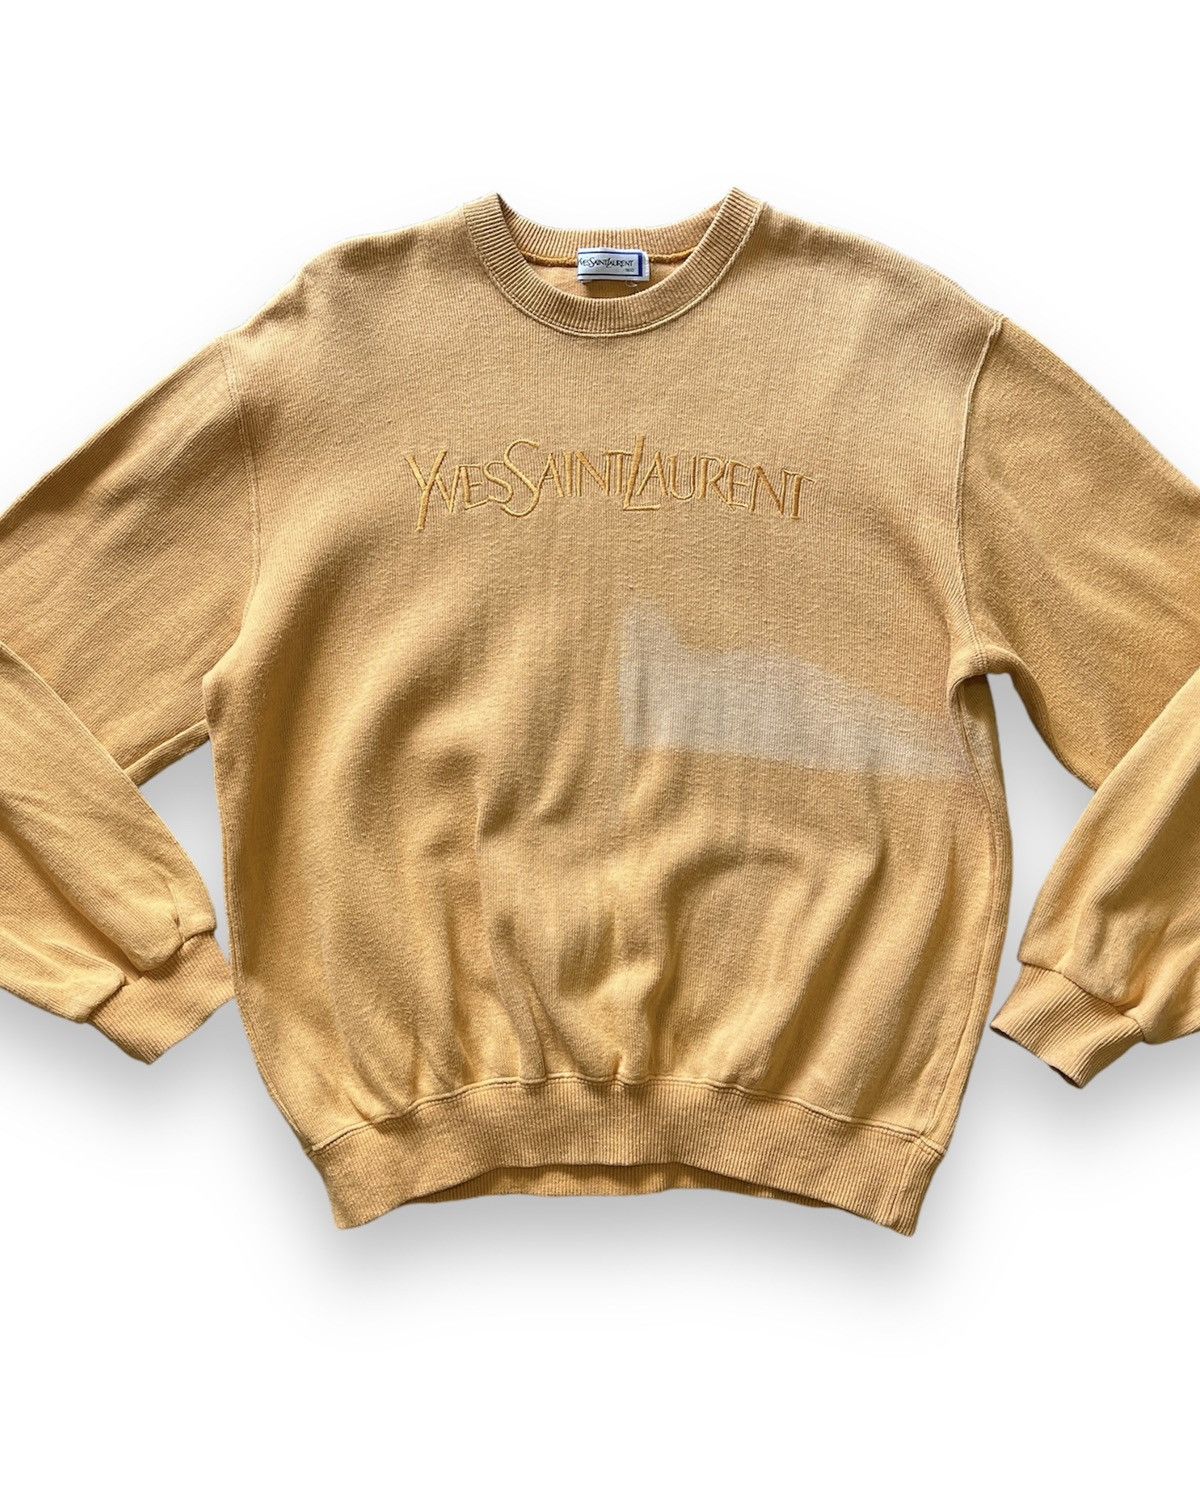 Sun Faded Vintage Yves Saint Laurent Sweater - 1